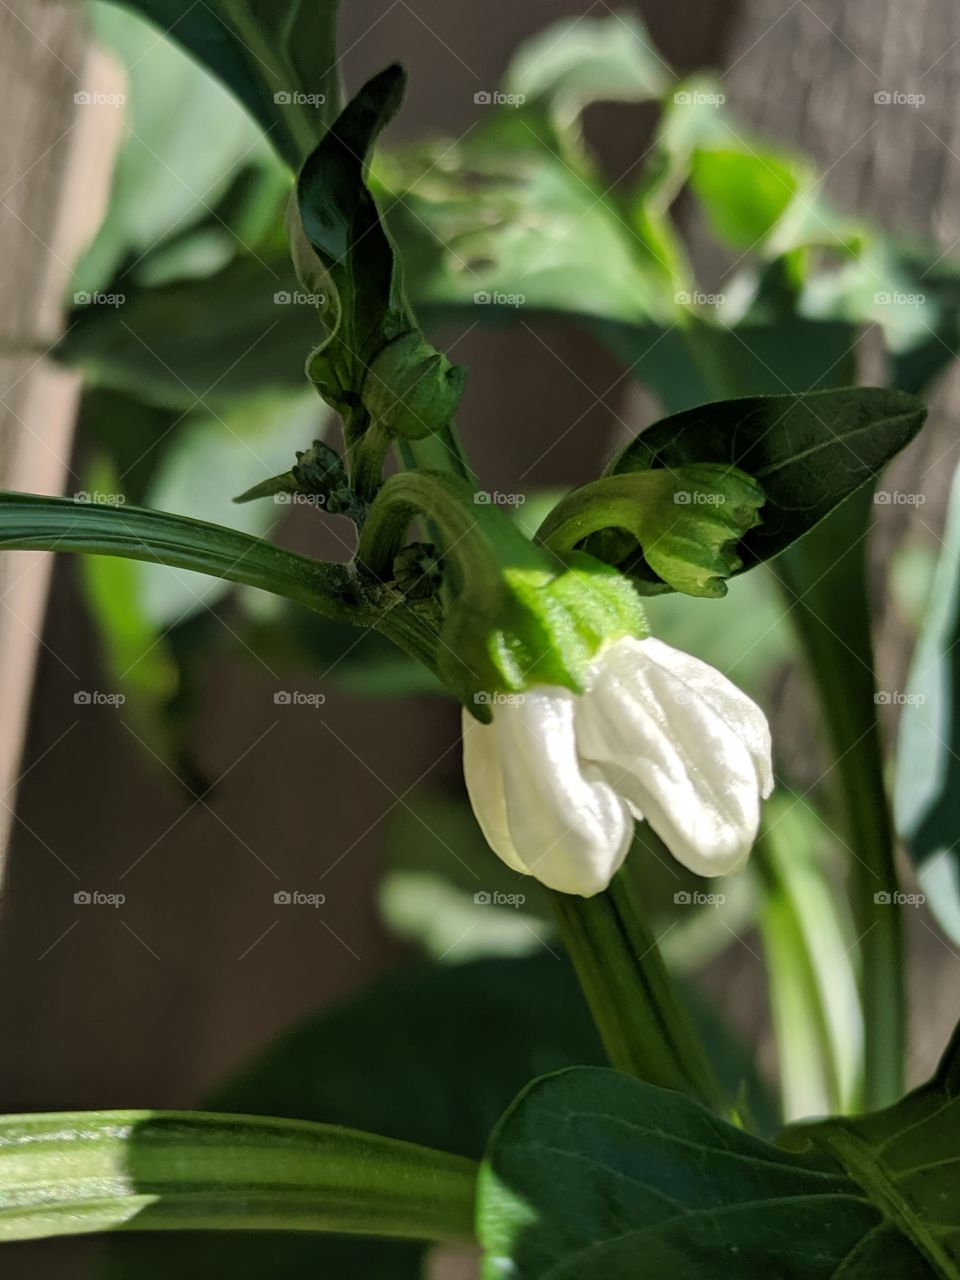 green pepper flowers